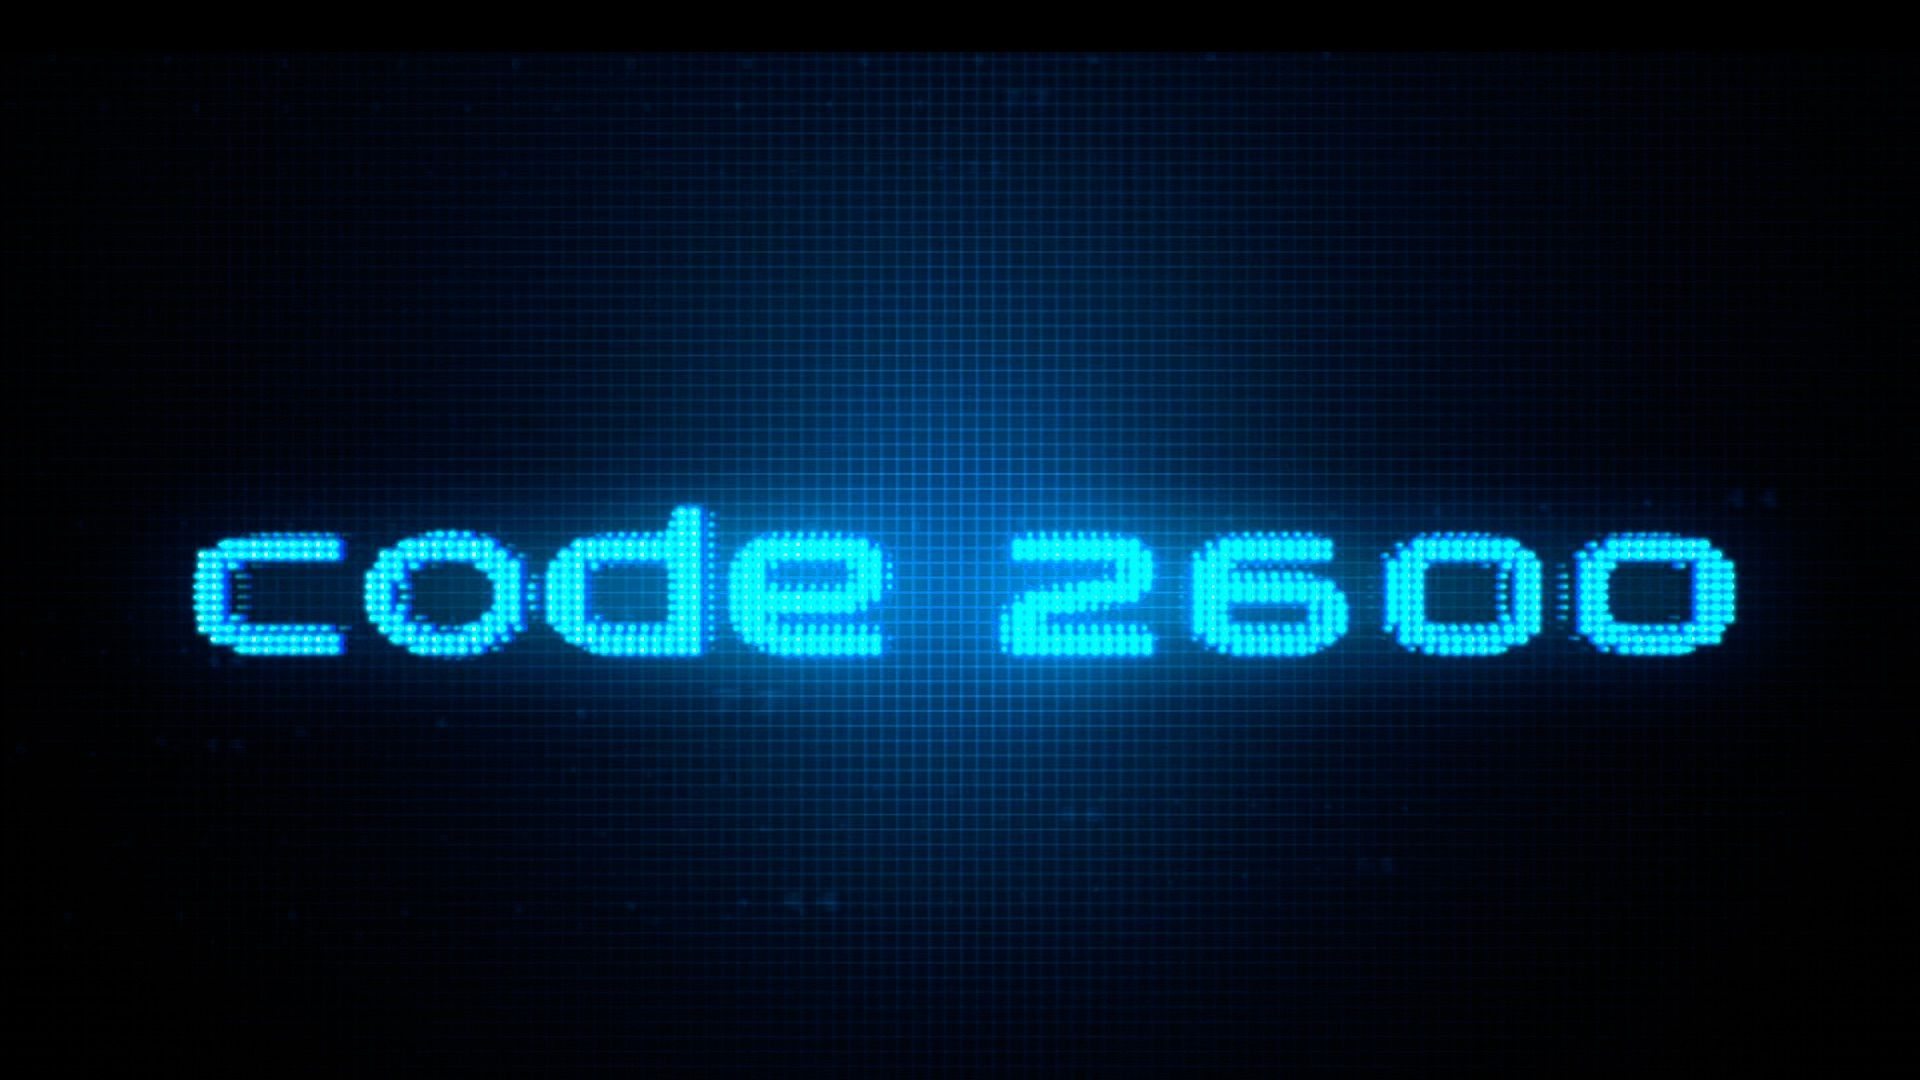 Code 2600 Backdrop